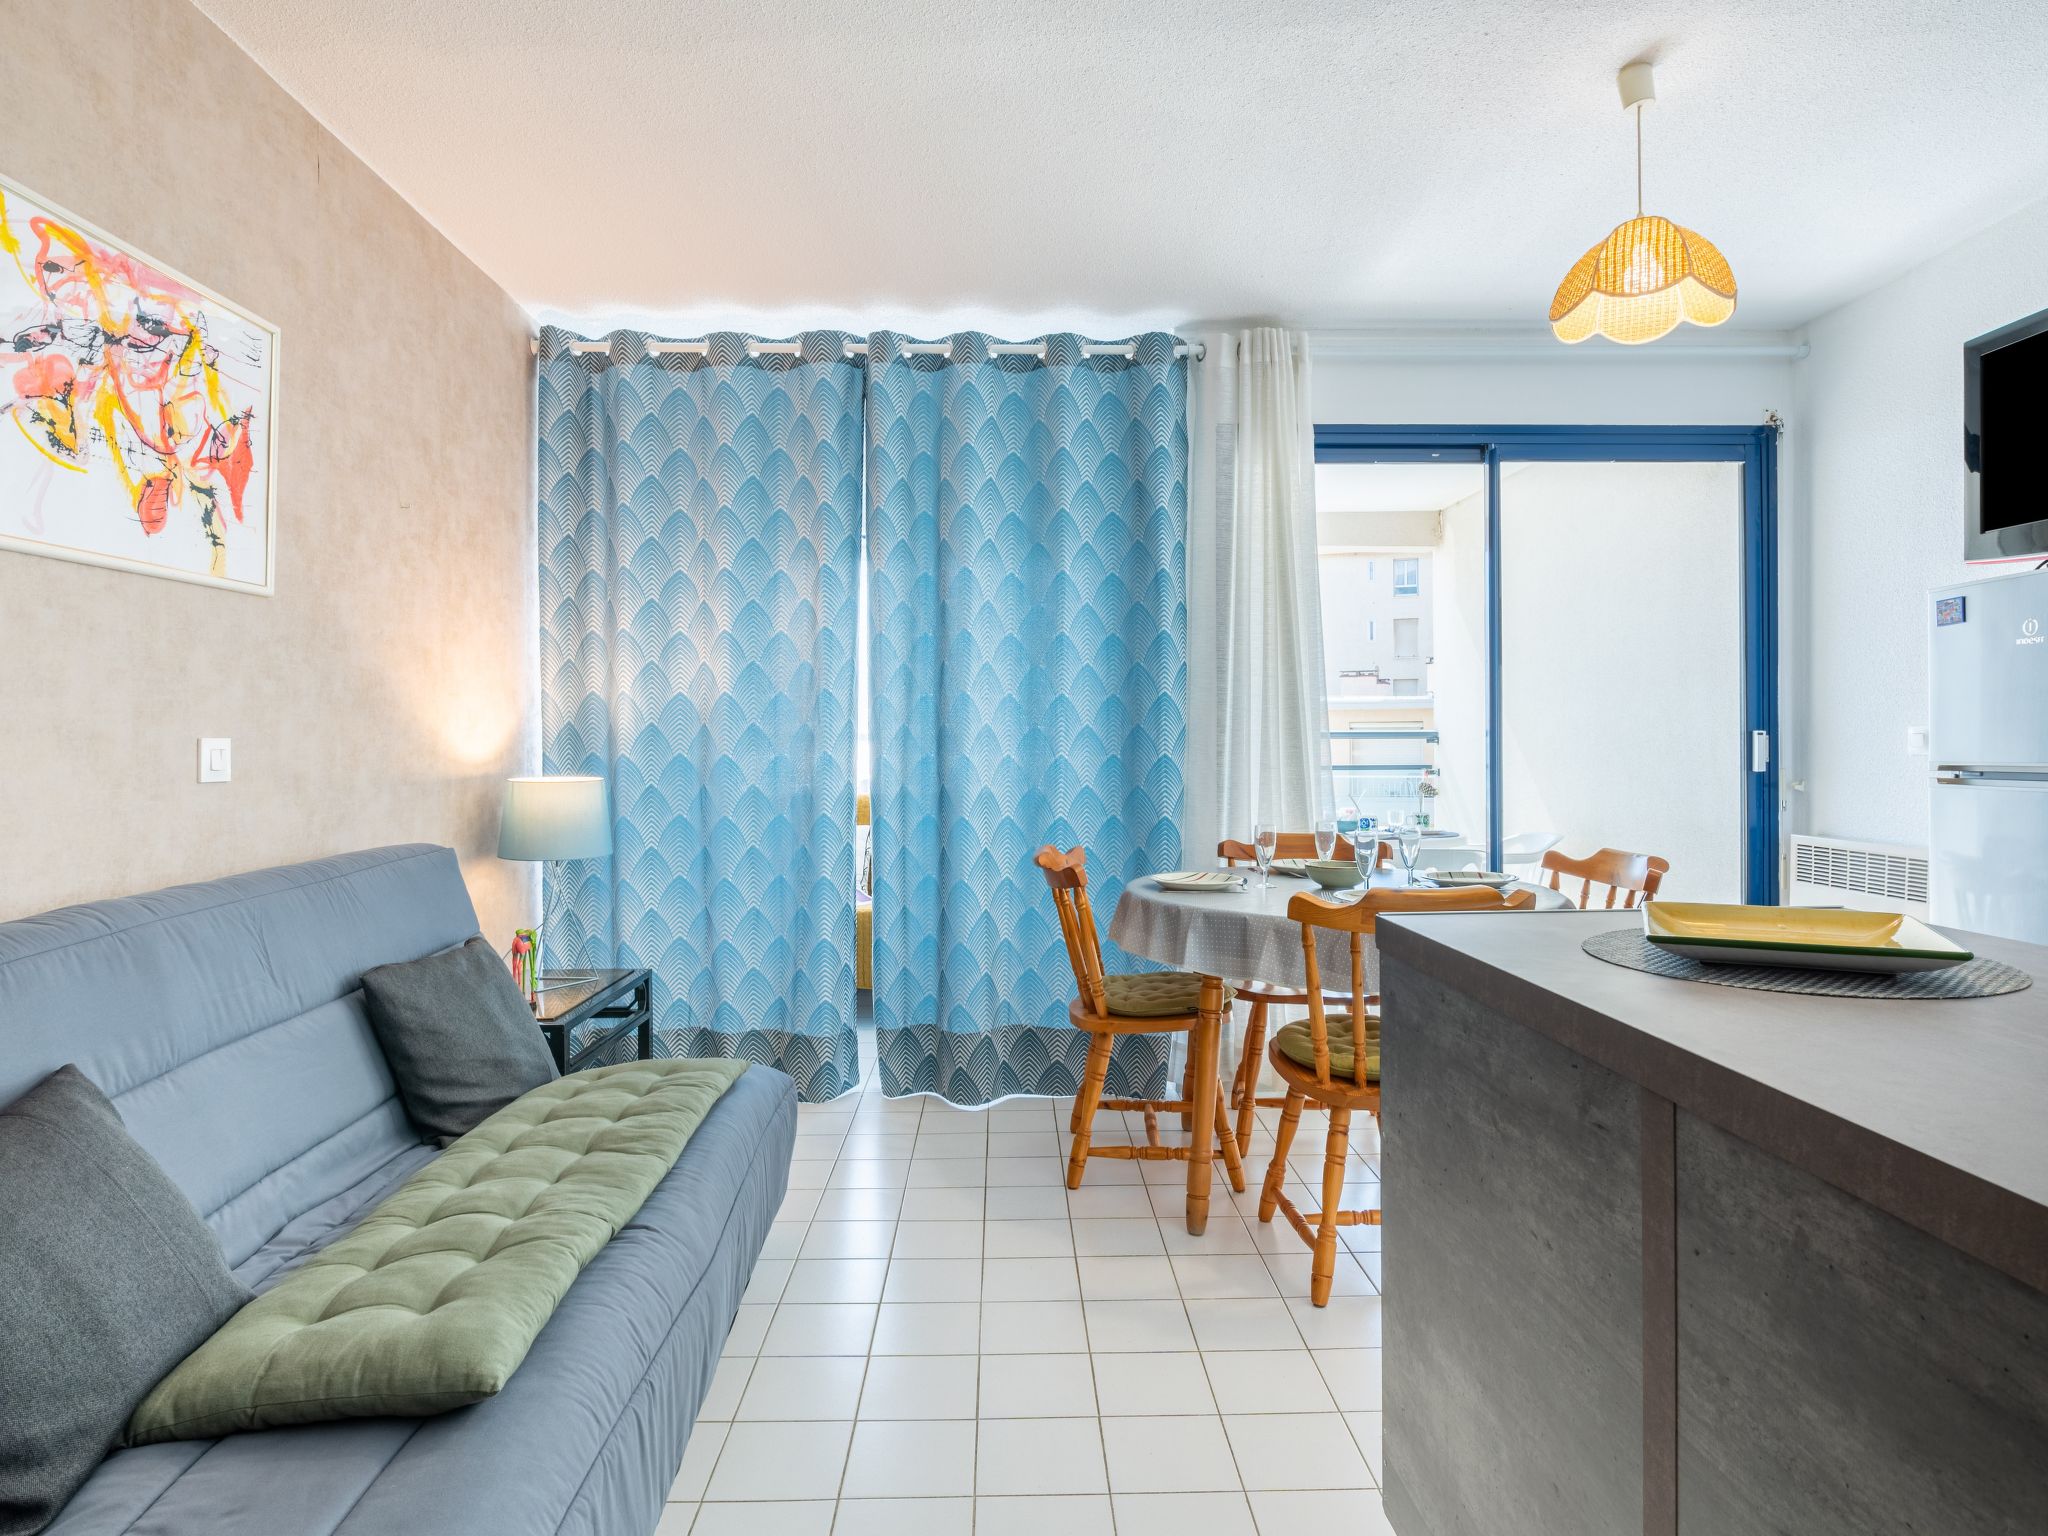 Foto 3 - Apartment mit 1 Schlafzimmer in Canet-en-Roussillon mit blick aufs meer